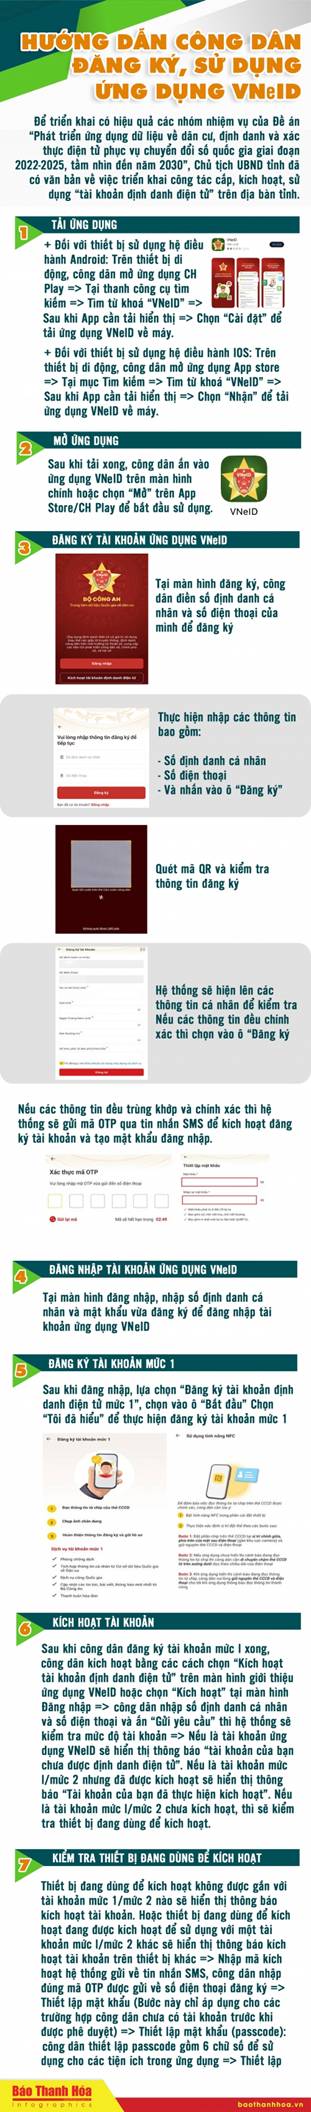 http://xuanbai.thoxuan.thanhhoa.gov.vn/file/download/636733783.html